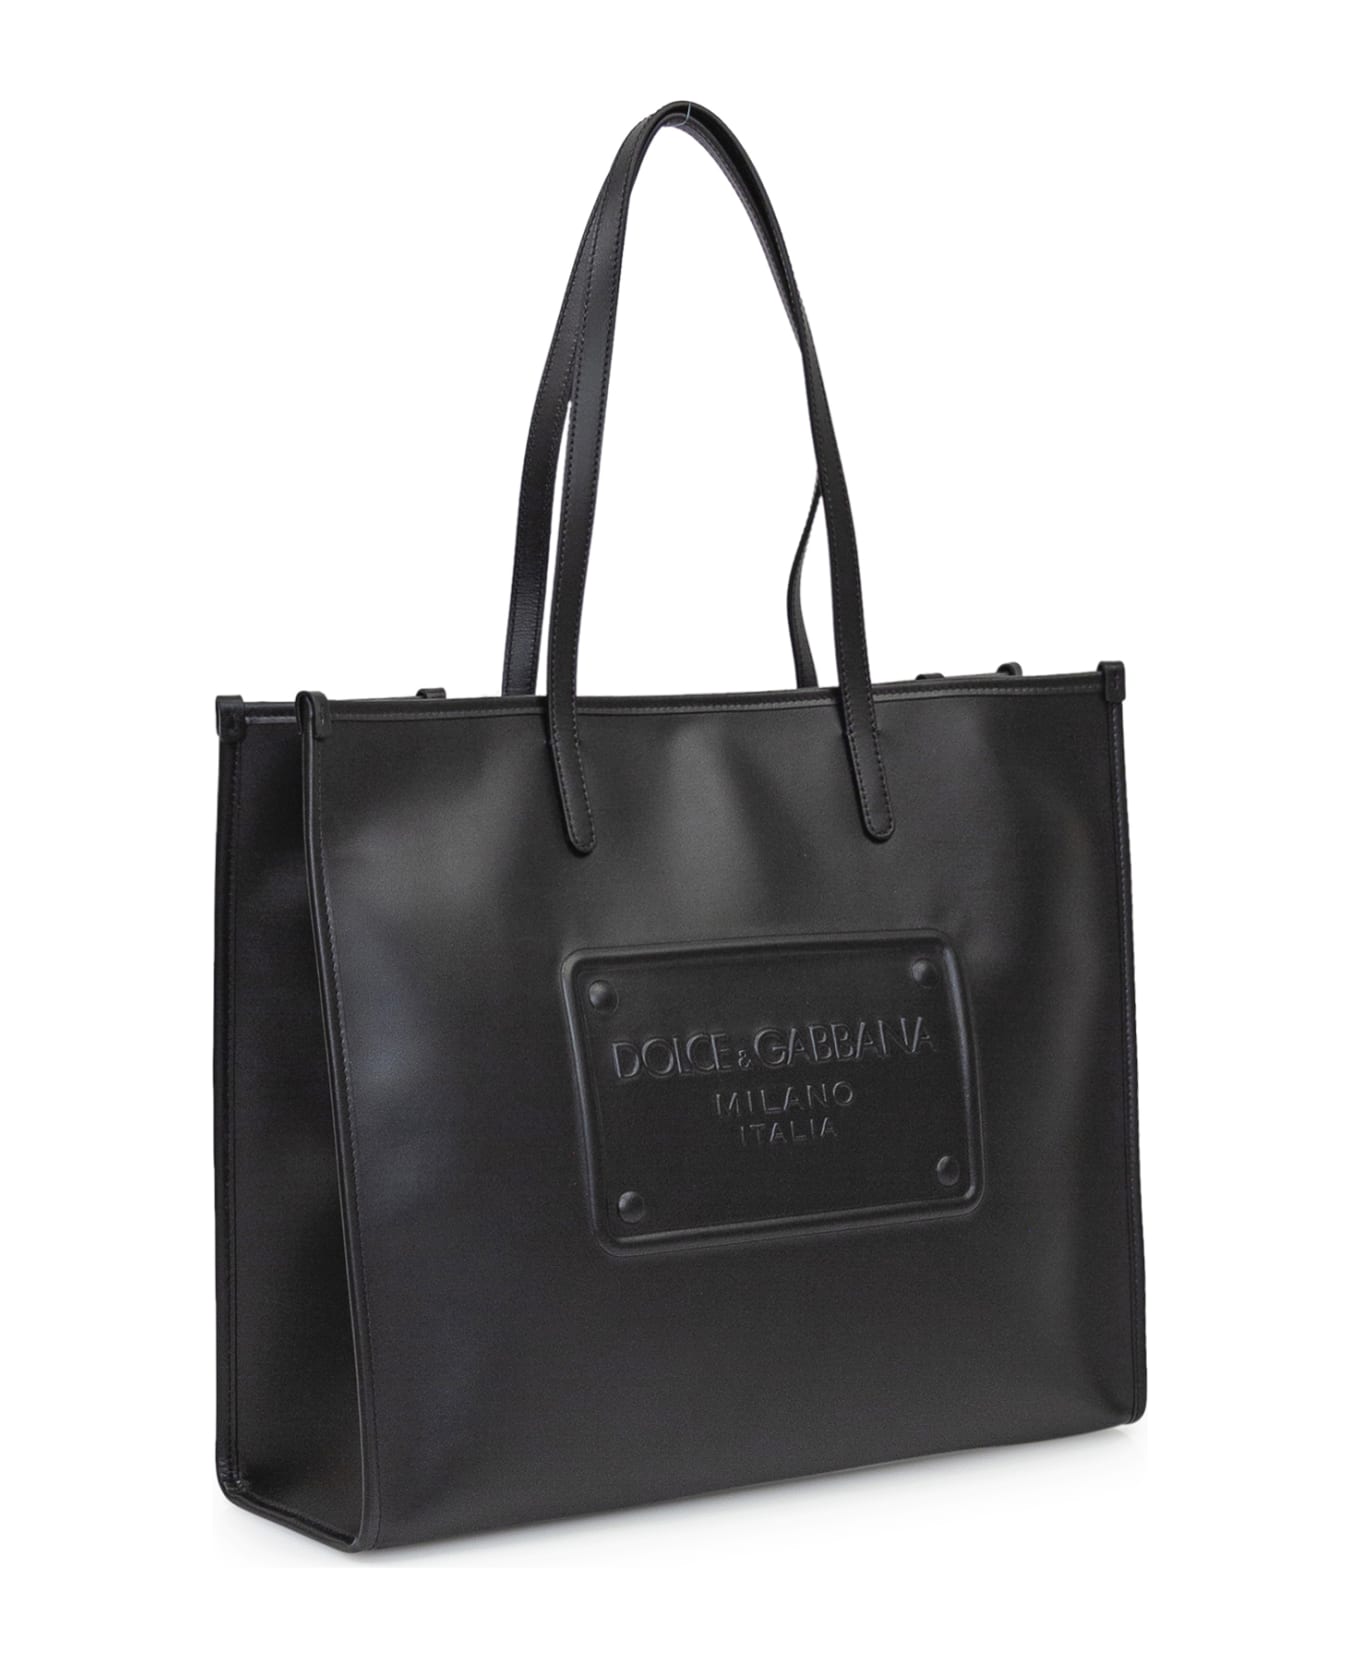 Dolce & Gabbana Black Leather Shopper - Black